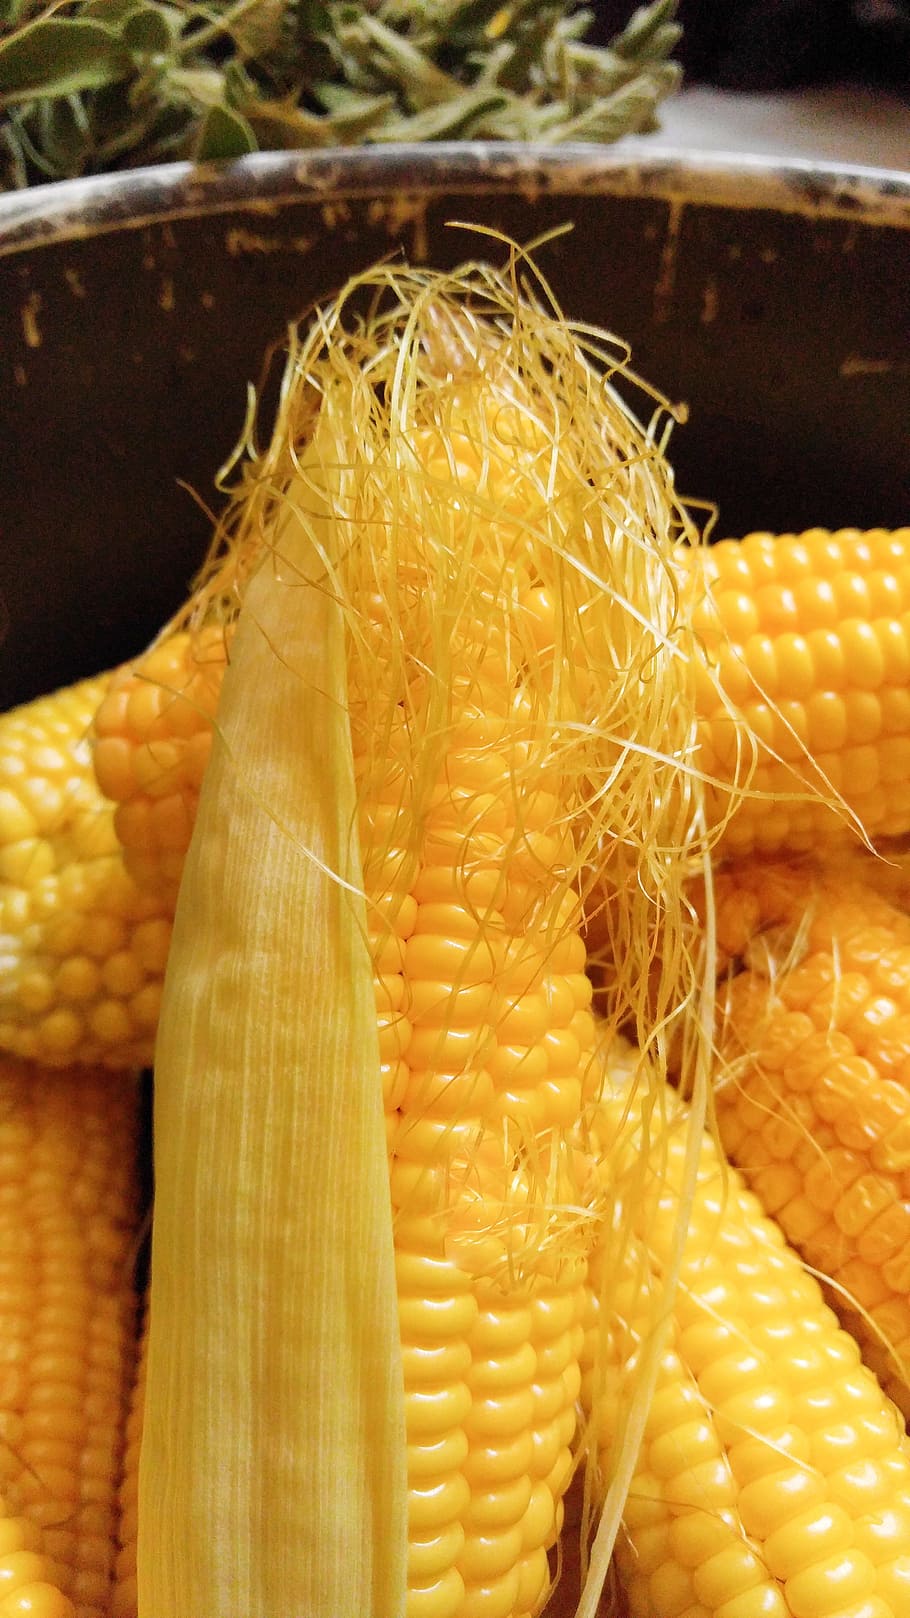 maíz, avellana, comida, mazorca de maíz, paja, oro, cereal, amarillo, comida y bebida, alimentos